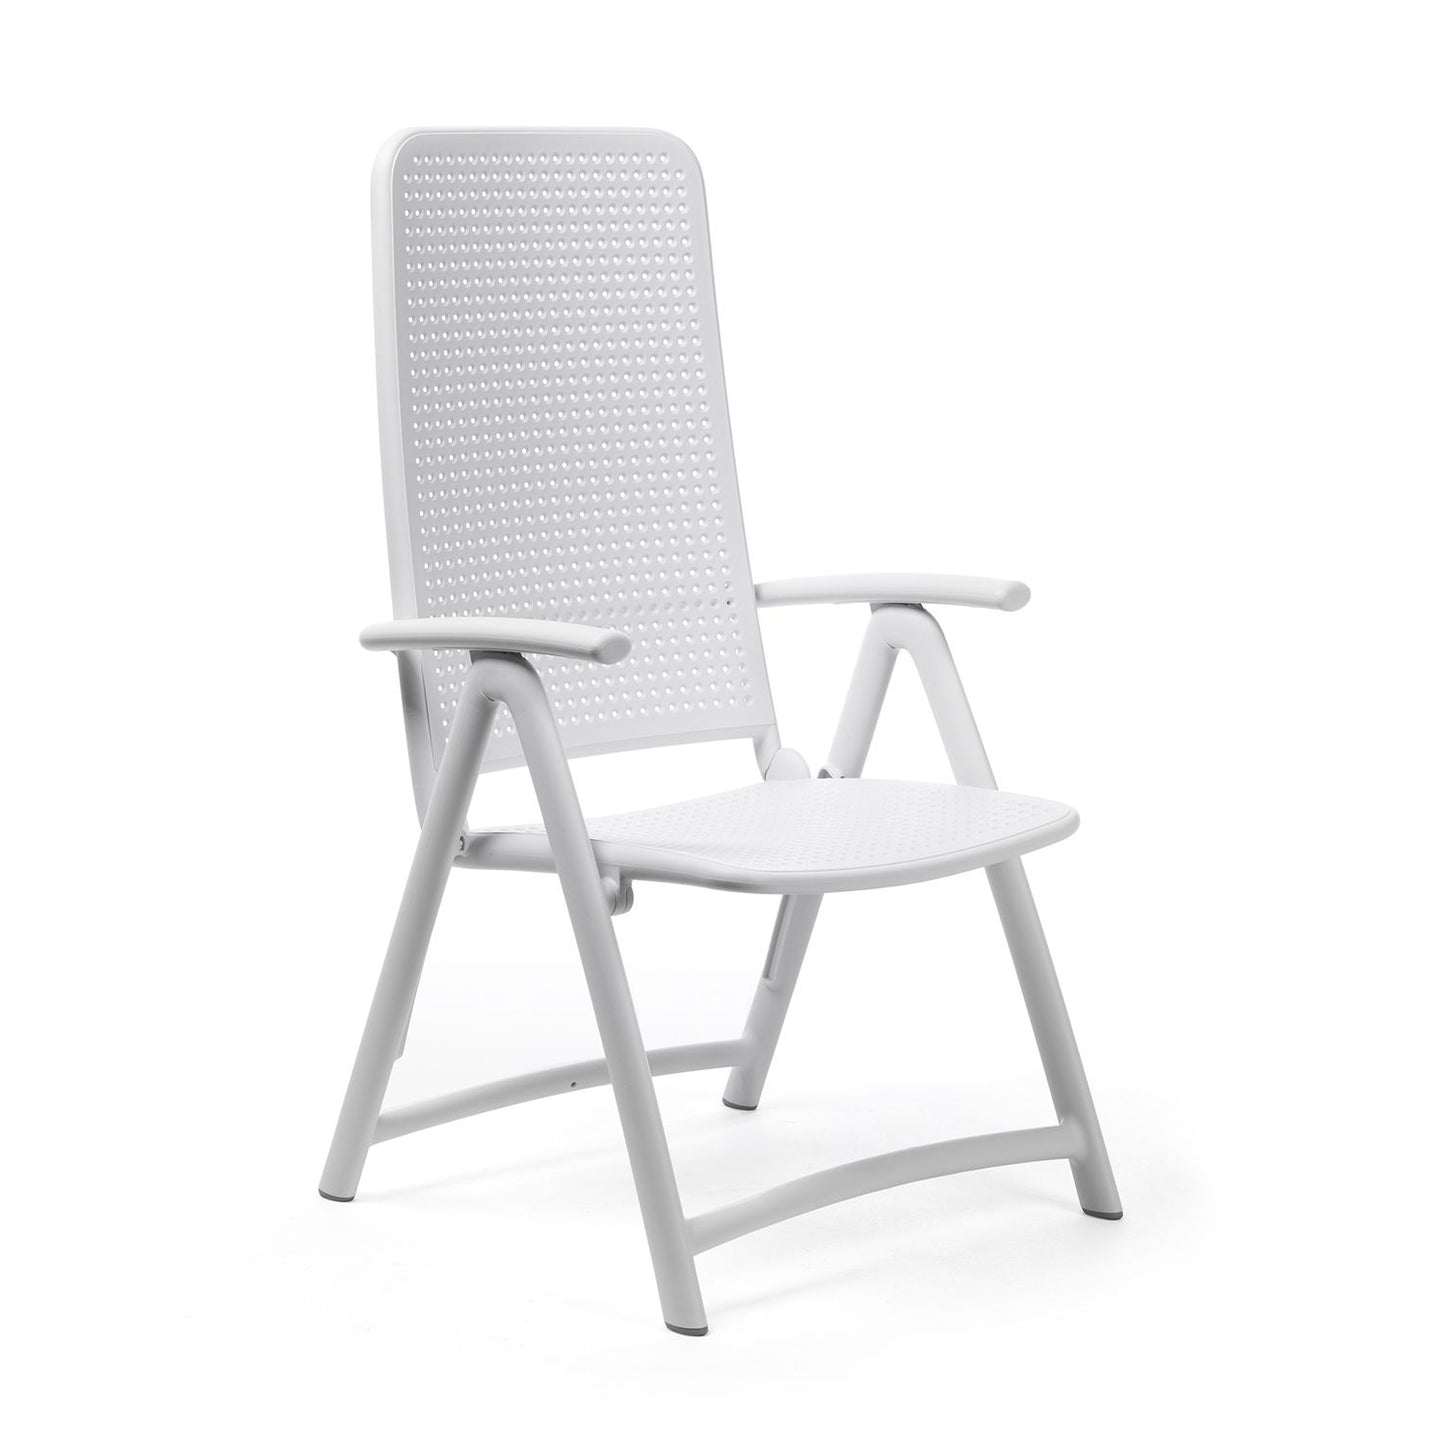 Darsena Garden Chair By Nardi